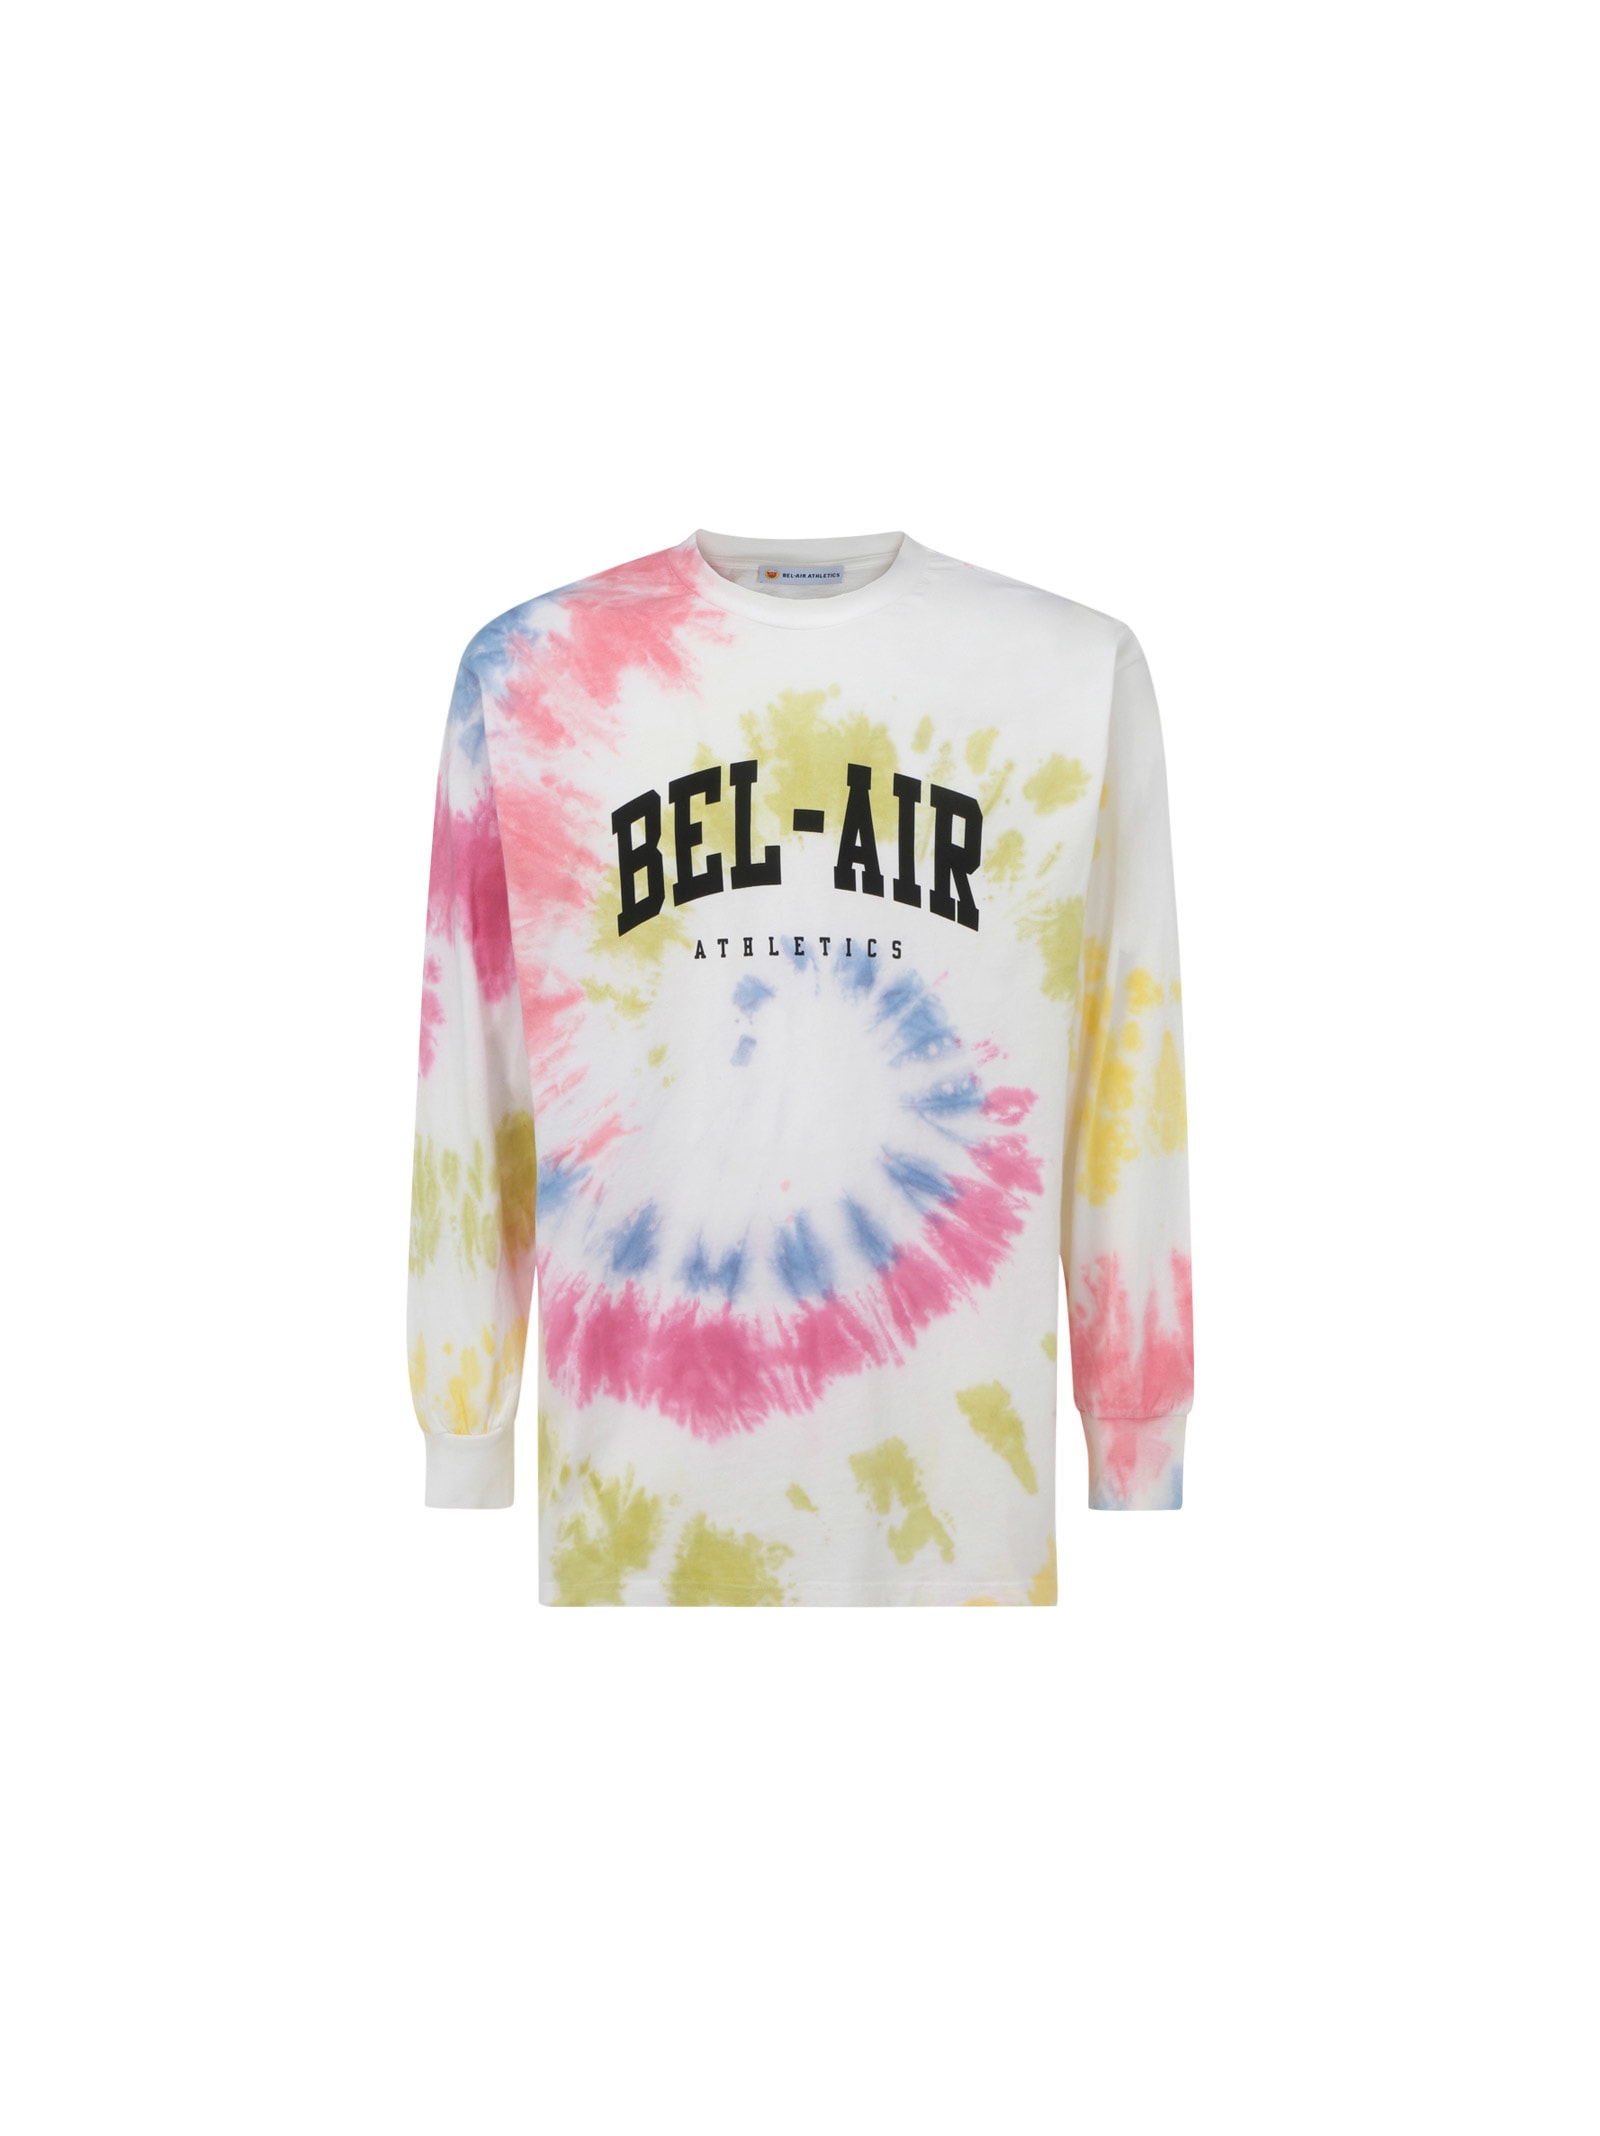 Bel-Air Athletics Long Sleeve T-shirt